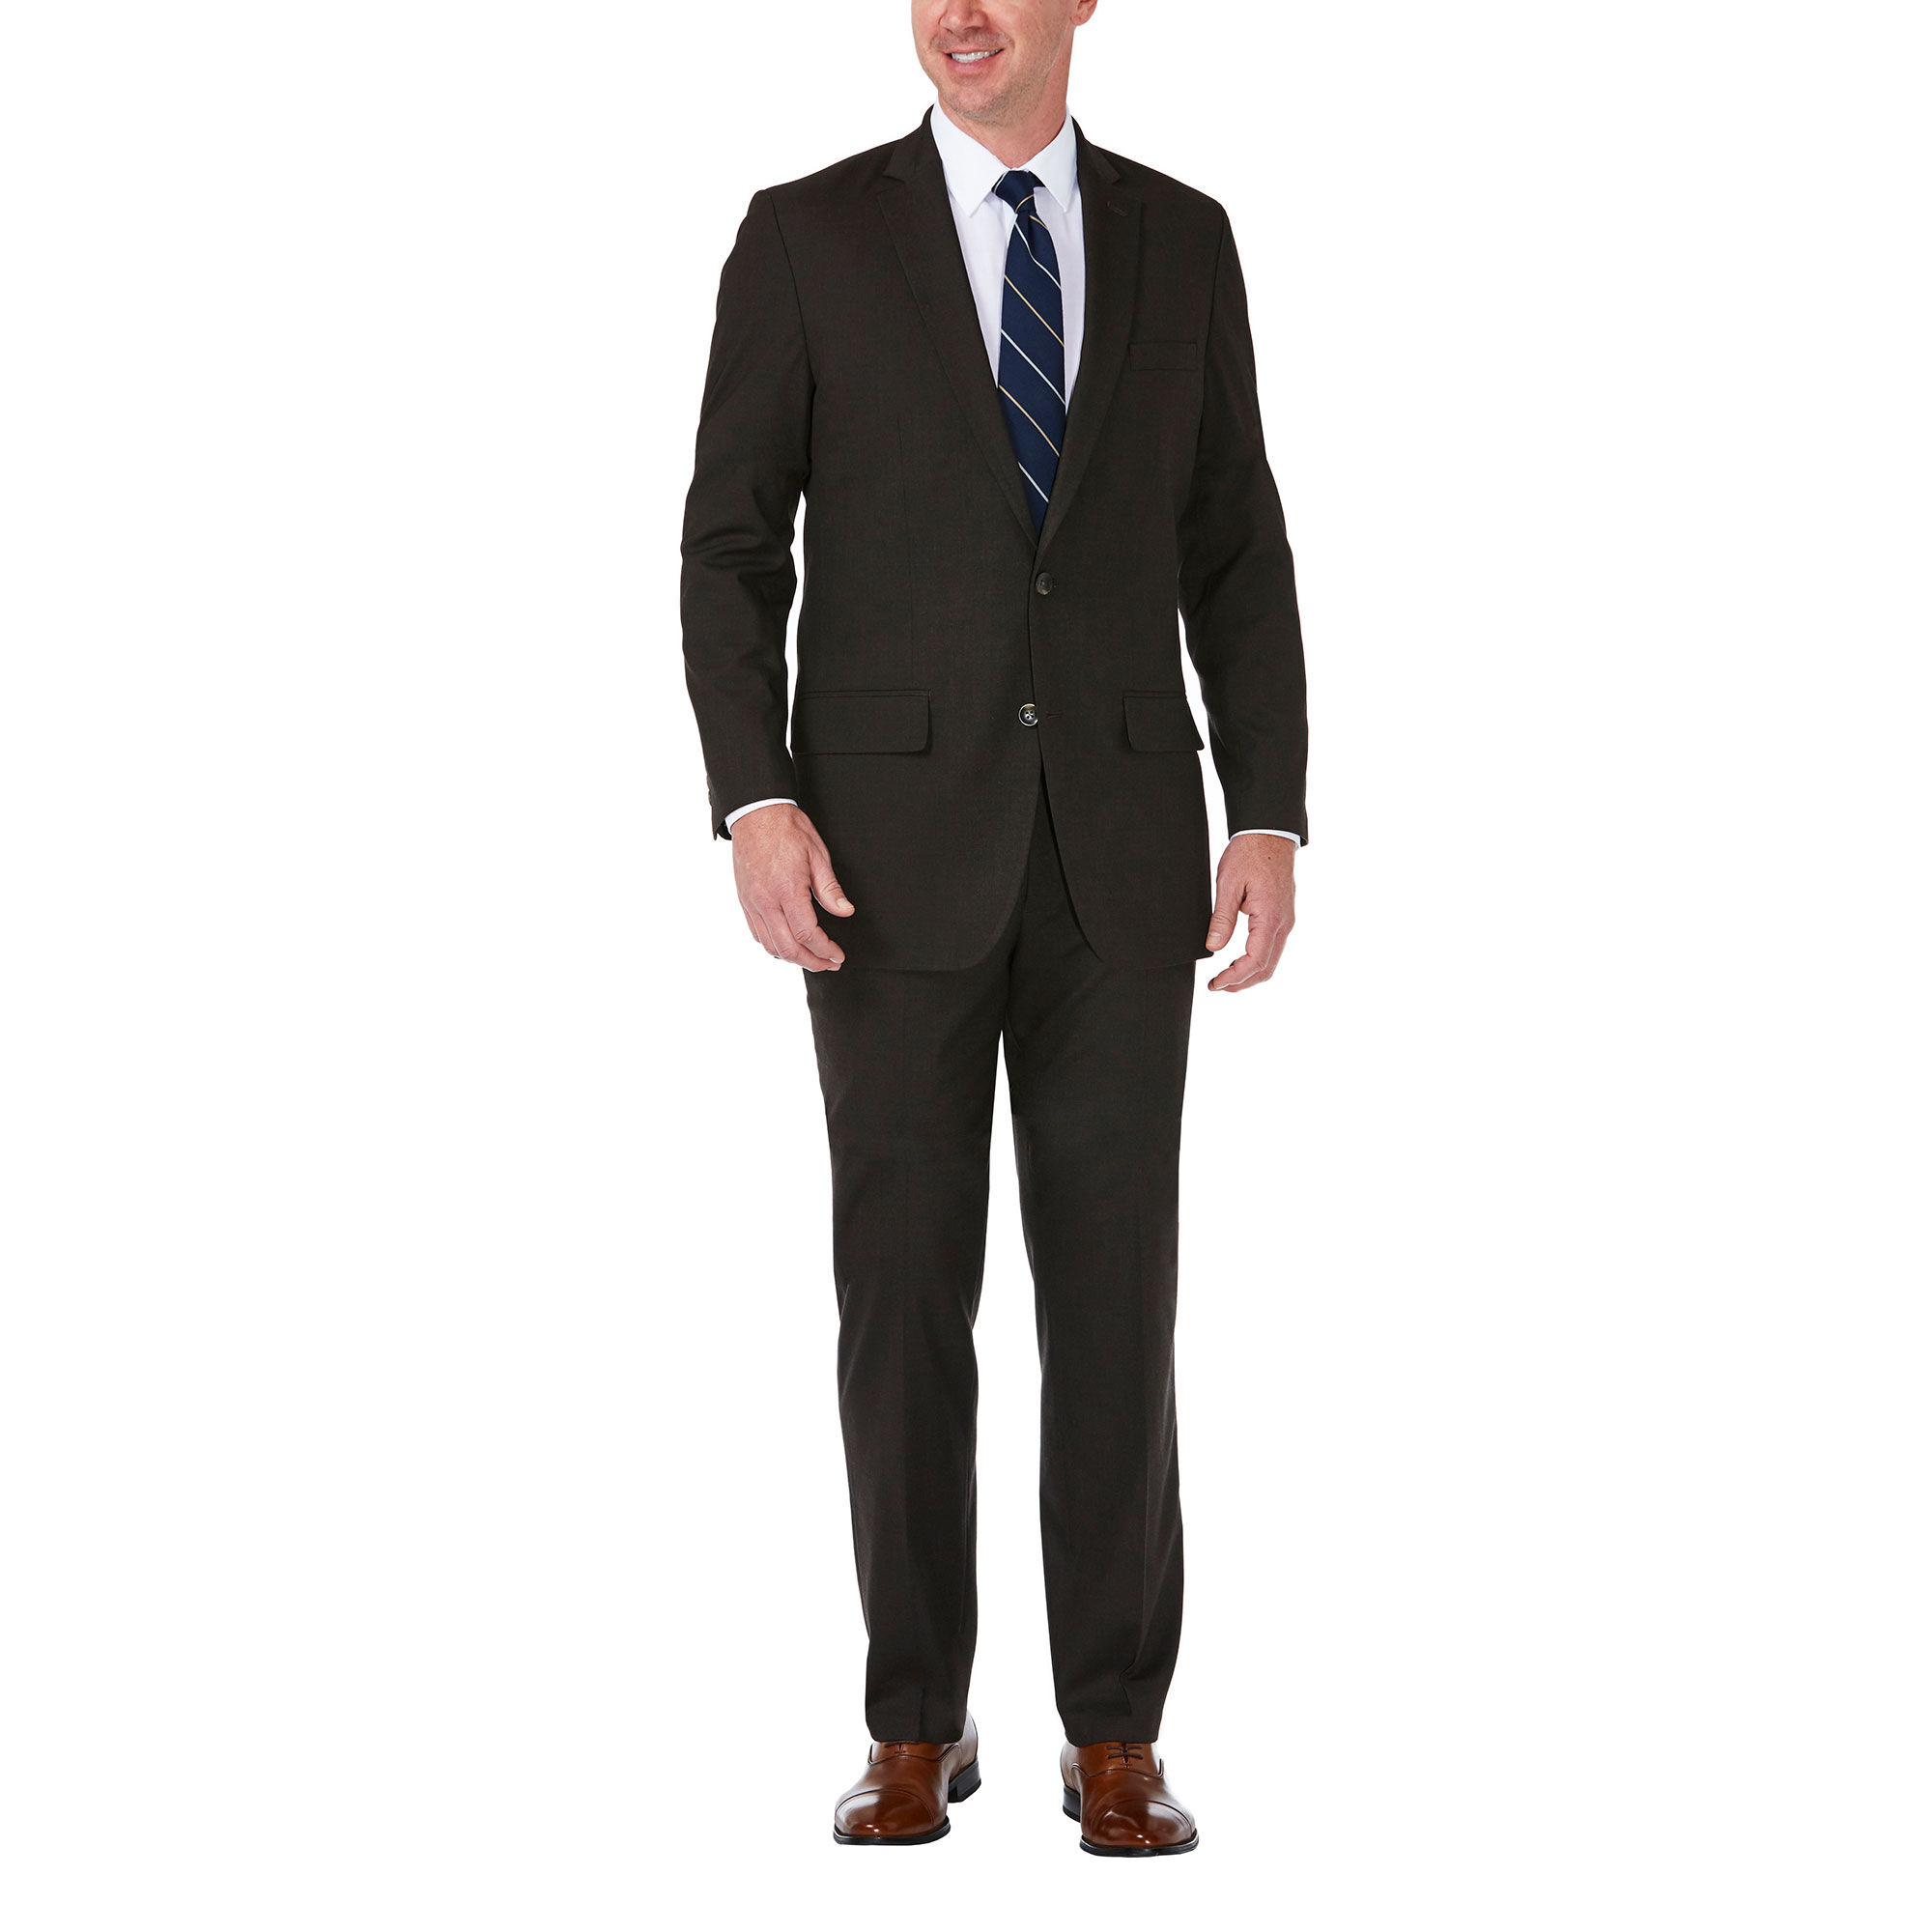 J.M. Haggar Premium Stretch Suit Jacket Chocolate (HZ80182 Clothing Suits) photo